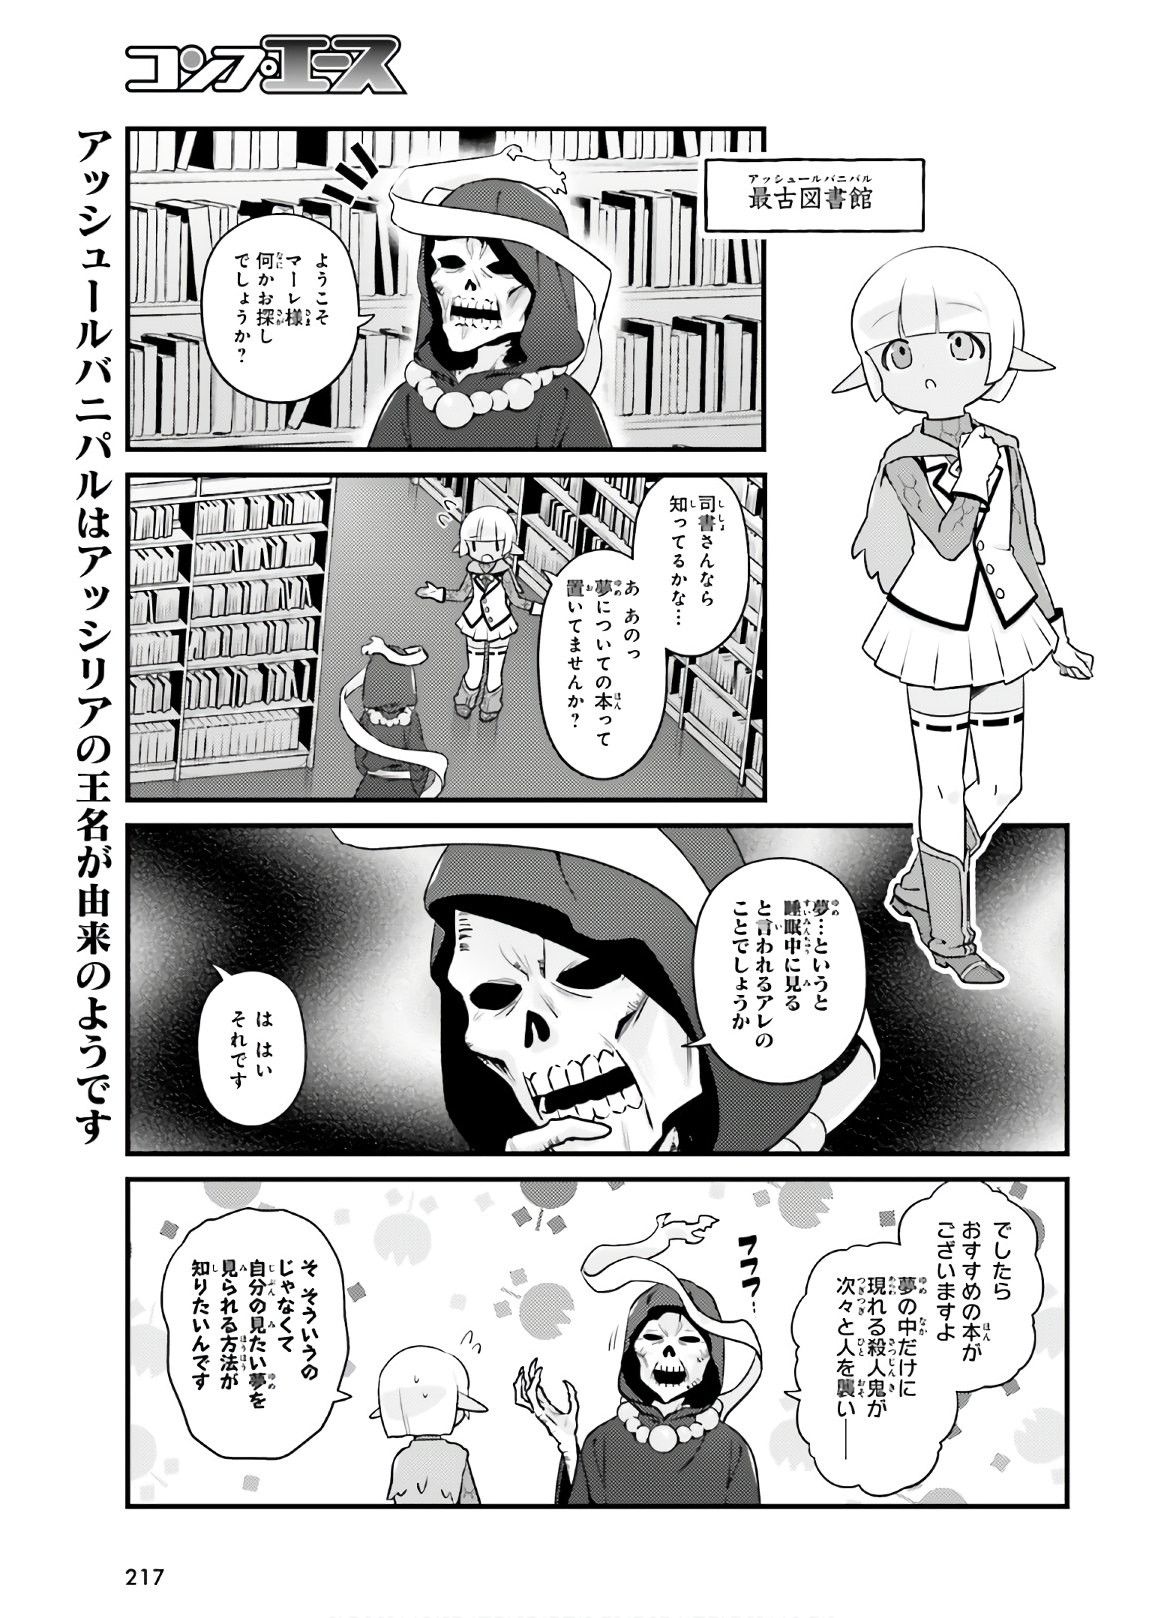 Overlord-Fushisha-no-Oh - Chapter 39 - Page 3